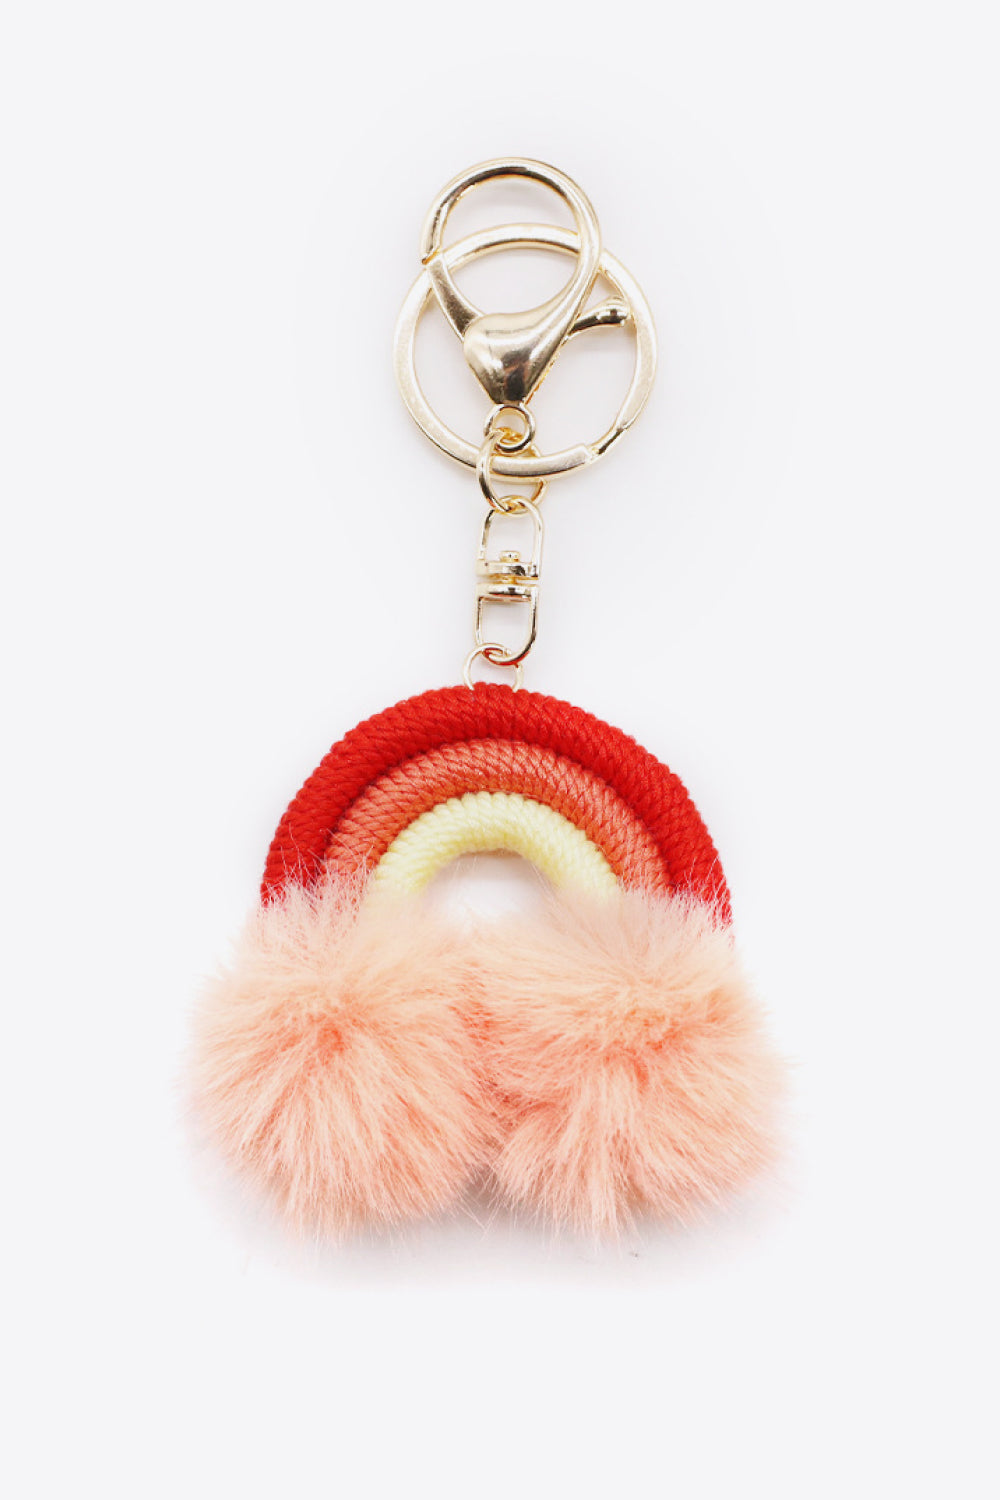 Trendsi Cupid Beauty Supplies Peach / One Size Keychains Assorted 4-Pack Rainbow Pom Pom Keychain